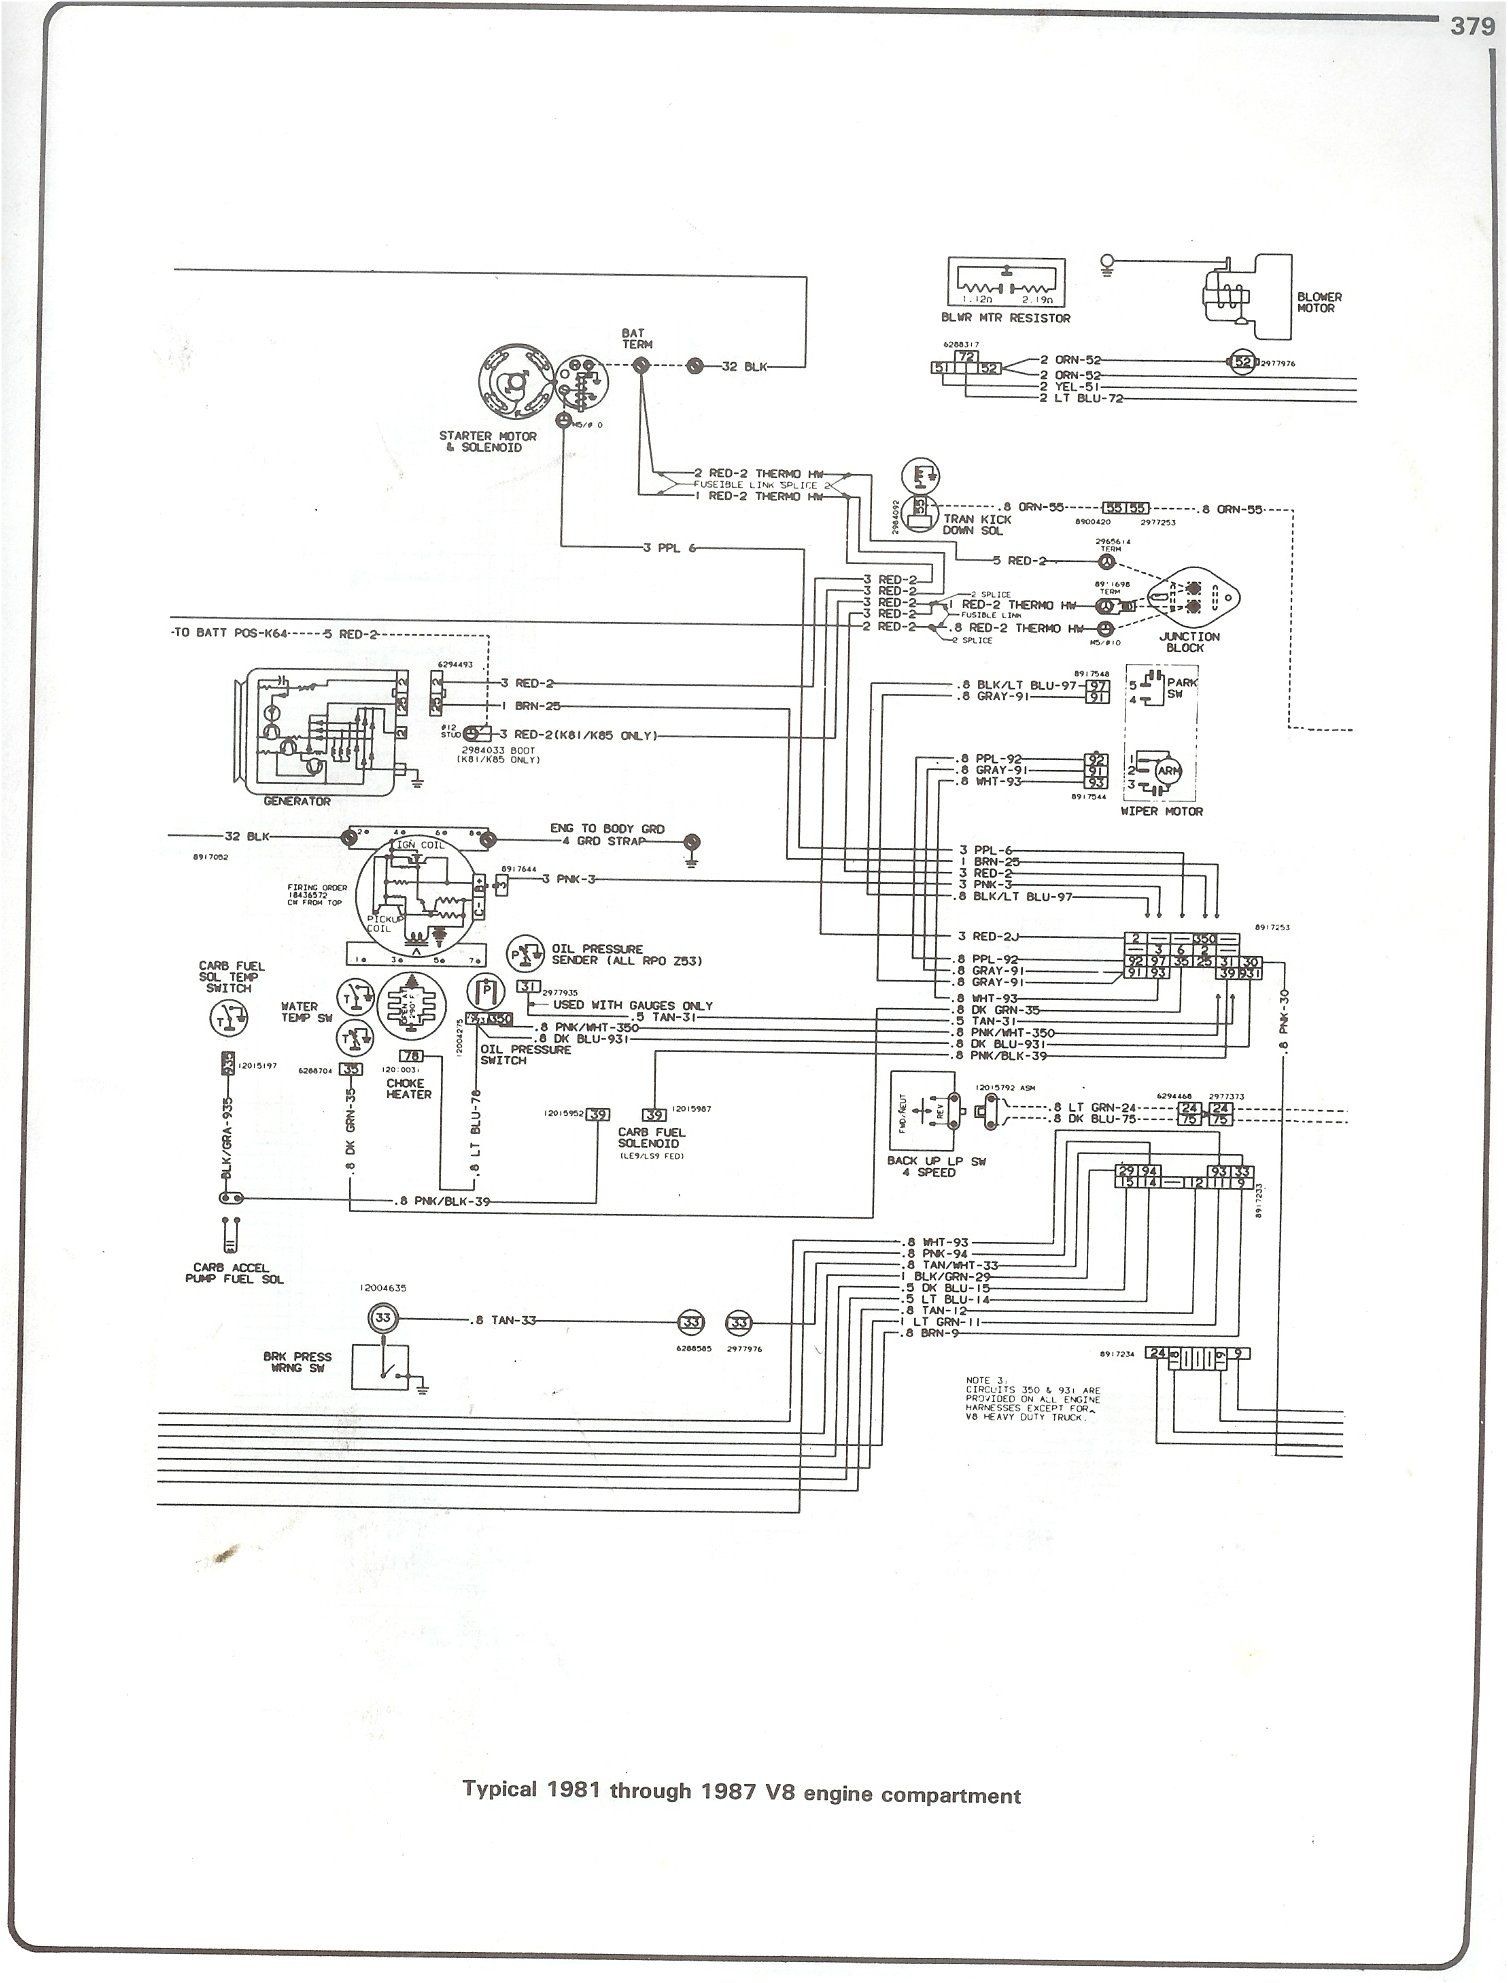 1979 Chevrolet Pickup Electrique Wiring Diagram 85 Chevy Truck Wiring Diagram Of 1979 Chevrolet Pickup Electrique Wiring Diagram